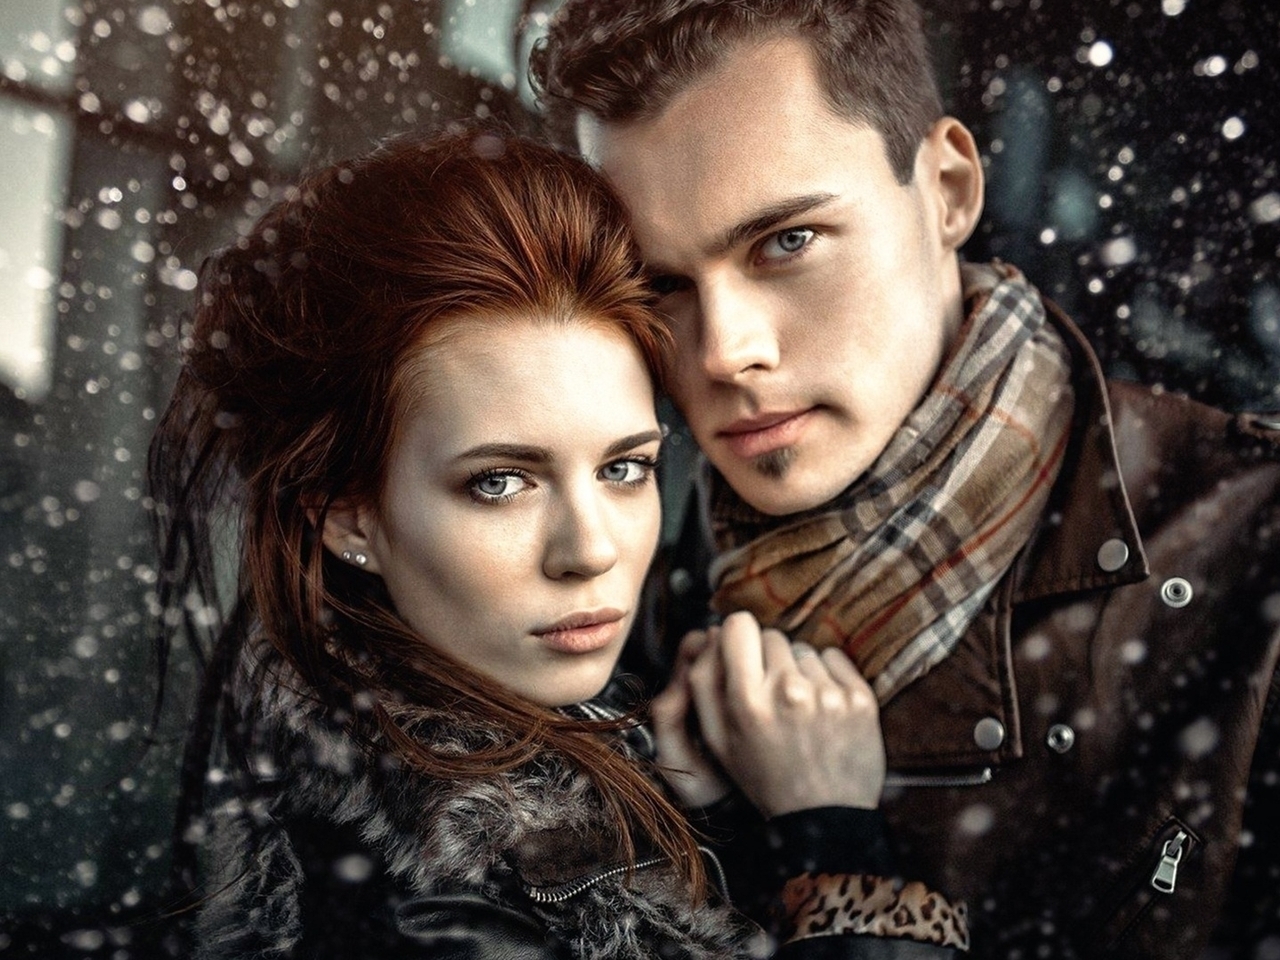 Картинка: Девушка, мужчина, взгляд, пара, снег, шарф